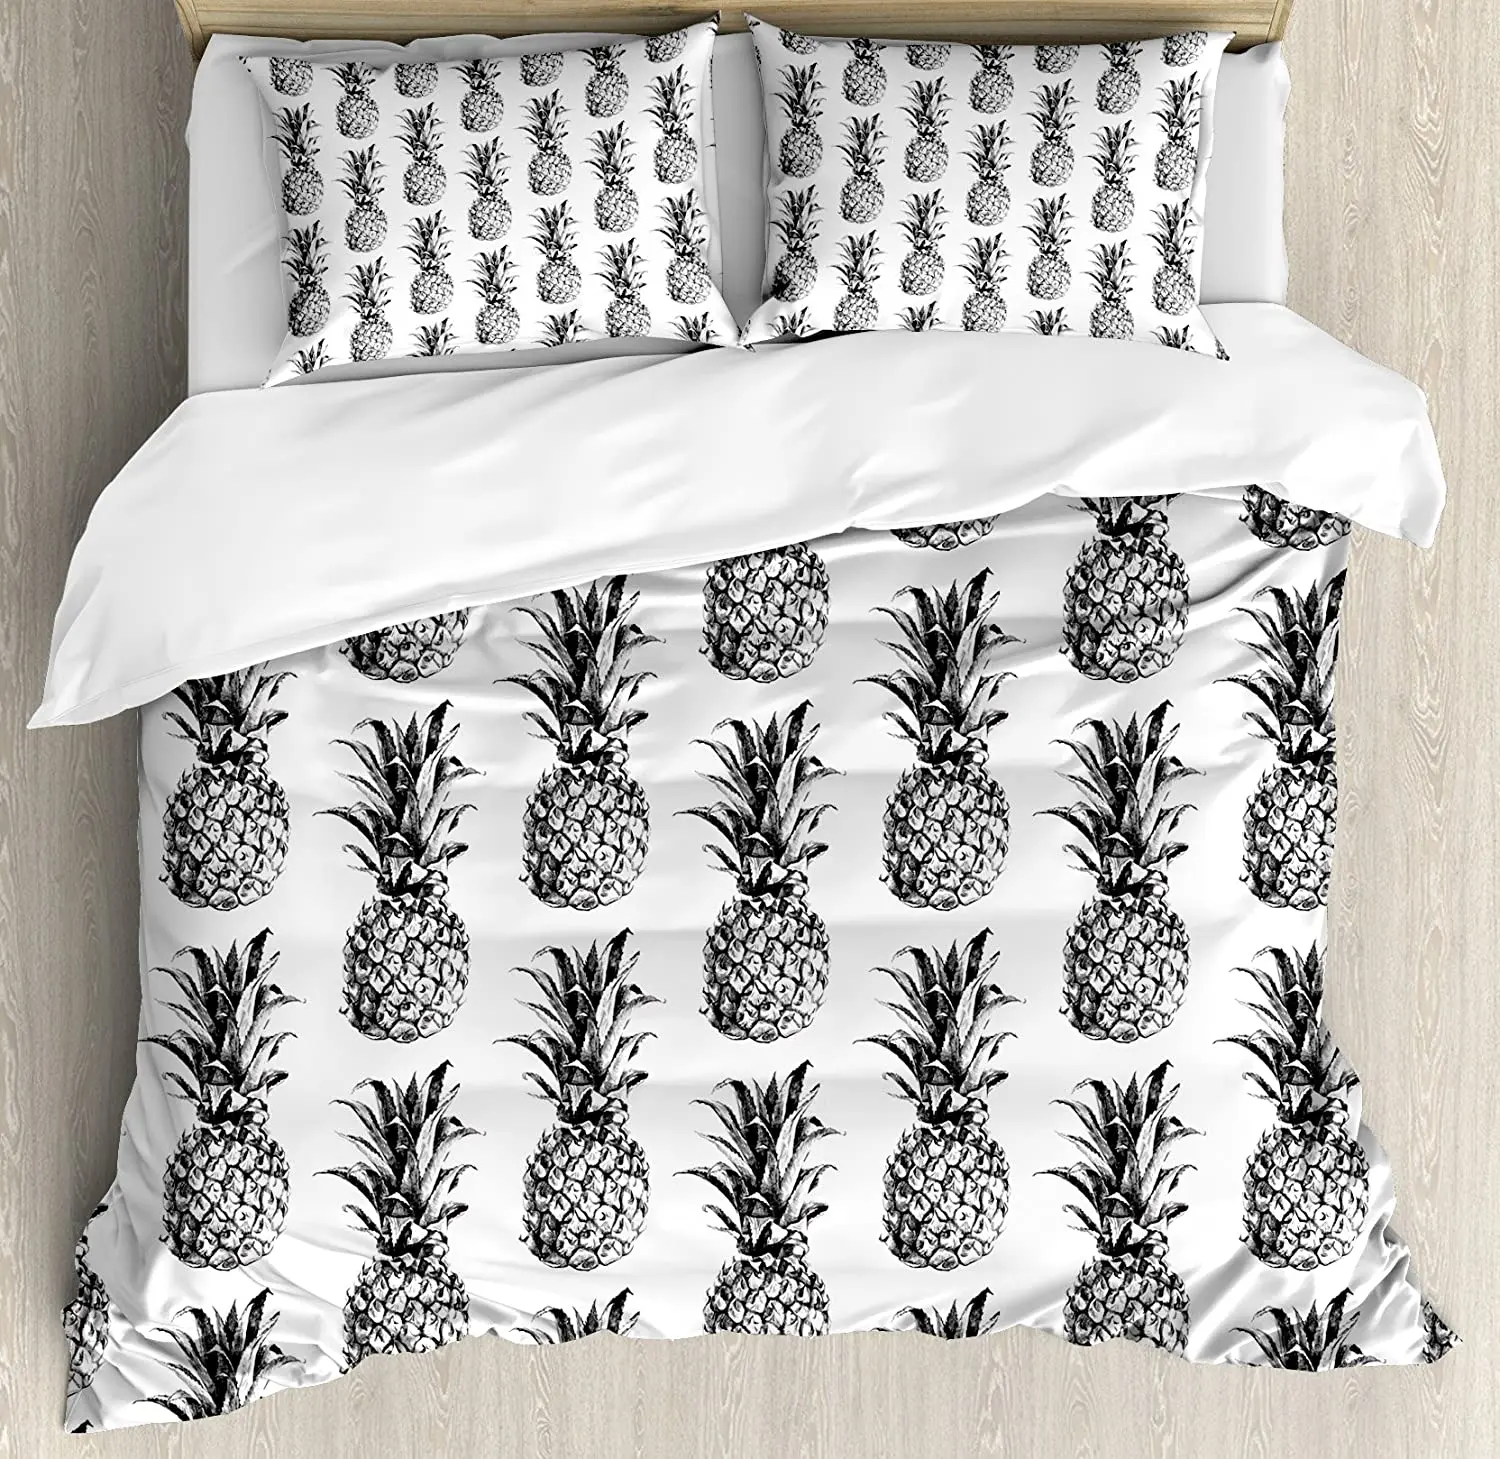 

Pineapple Bedding Set Comforter Duvet Cover Pillow Shams Artistic Hand Drawn Tropical Theme Vintage Bedding Cover Double Bed Set